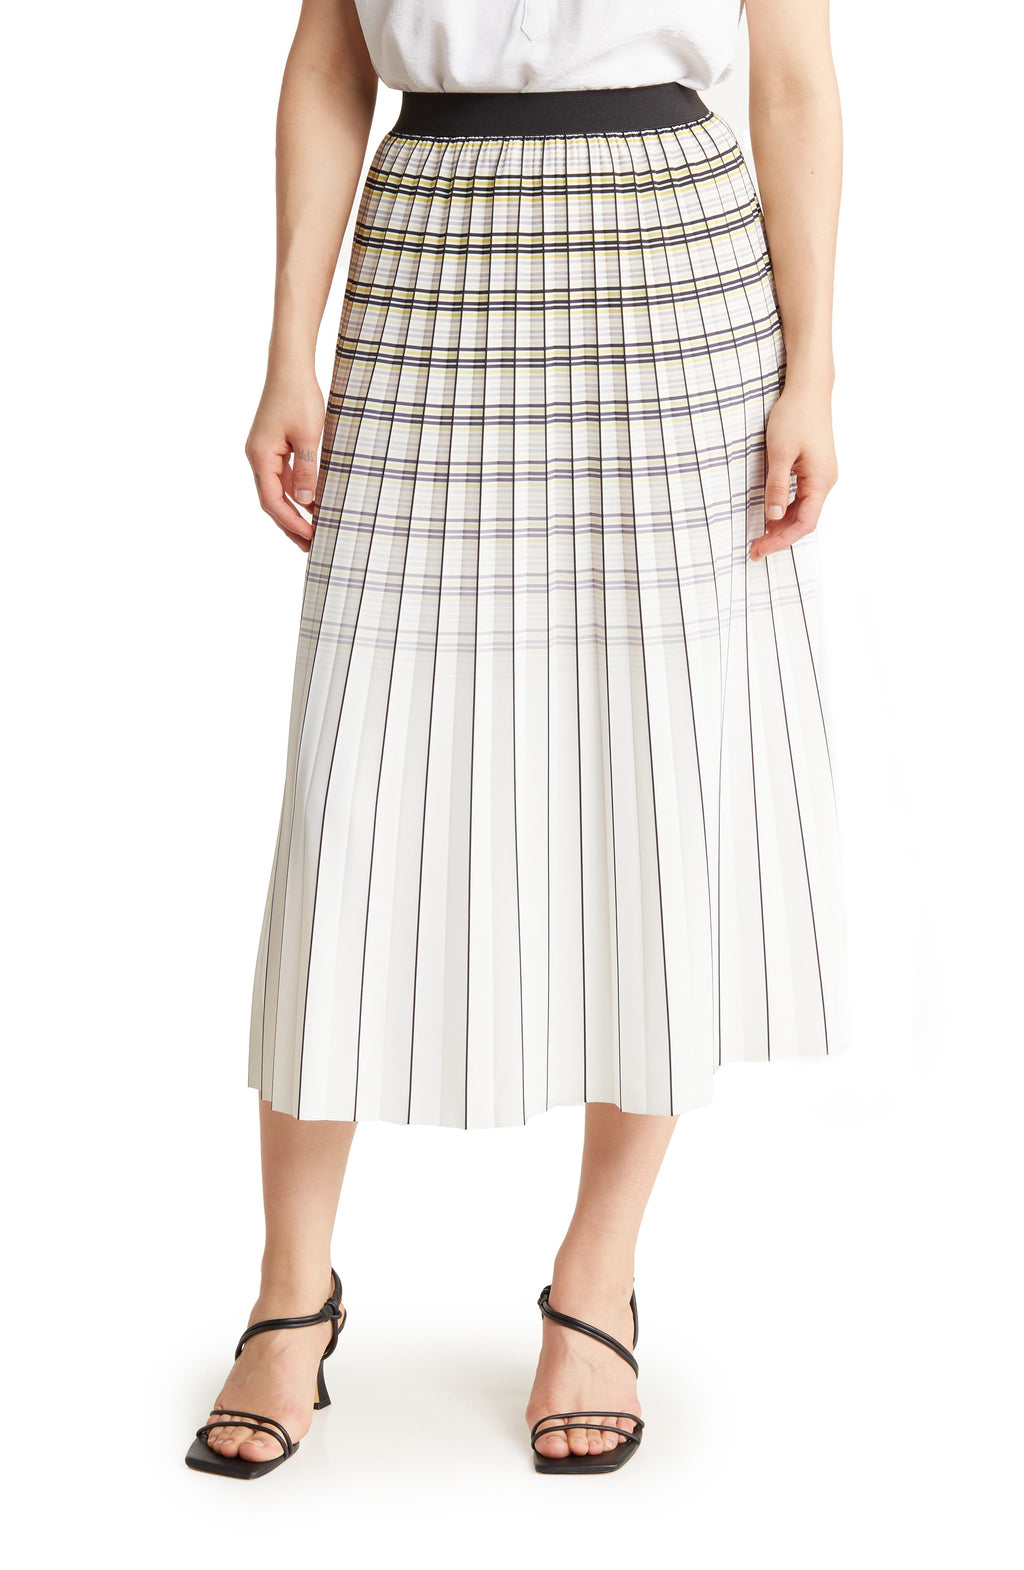 ADRIANNA PAPELL Ombré Plaid Pleat Skirt, Main, color, IVORY/LEMONGRASS OMBRE PLAID